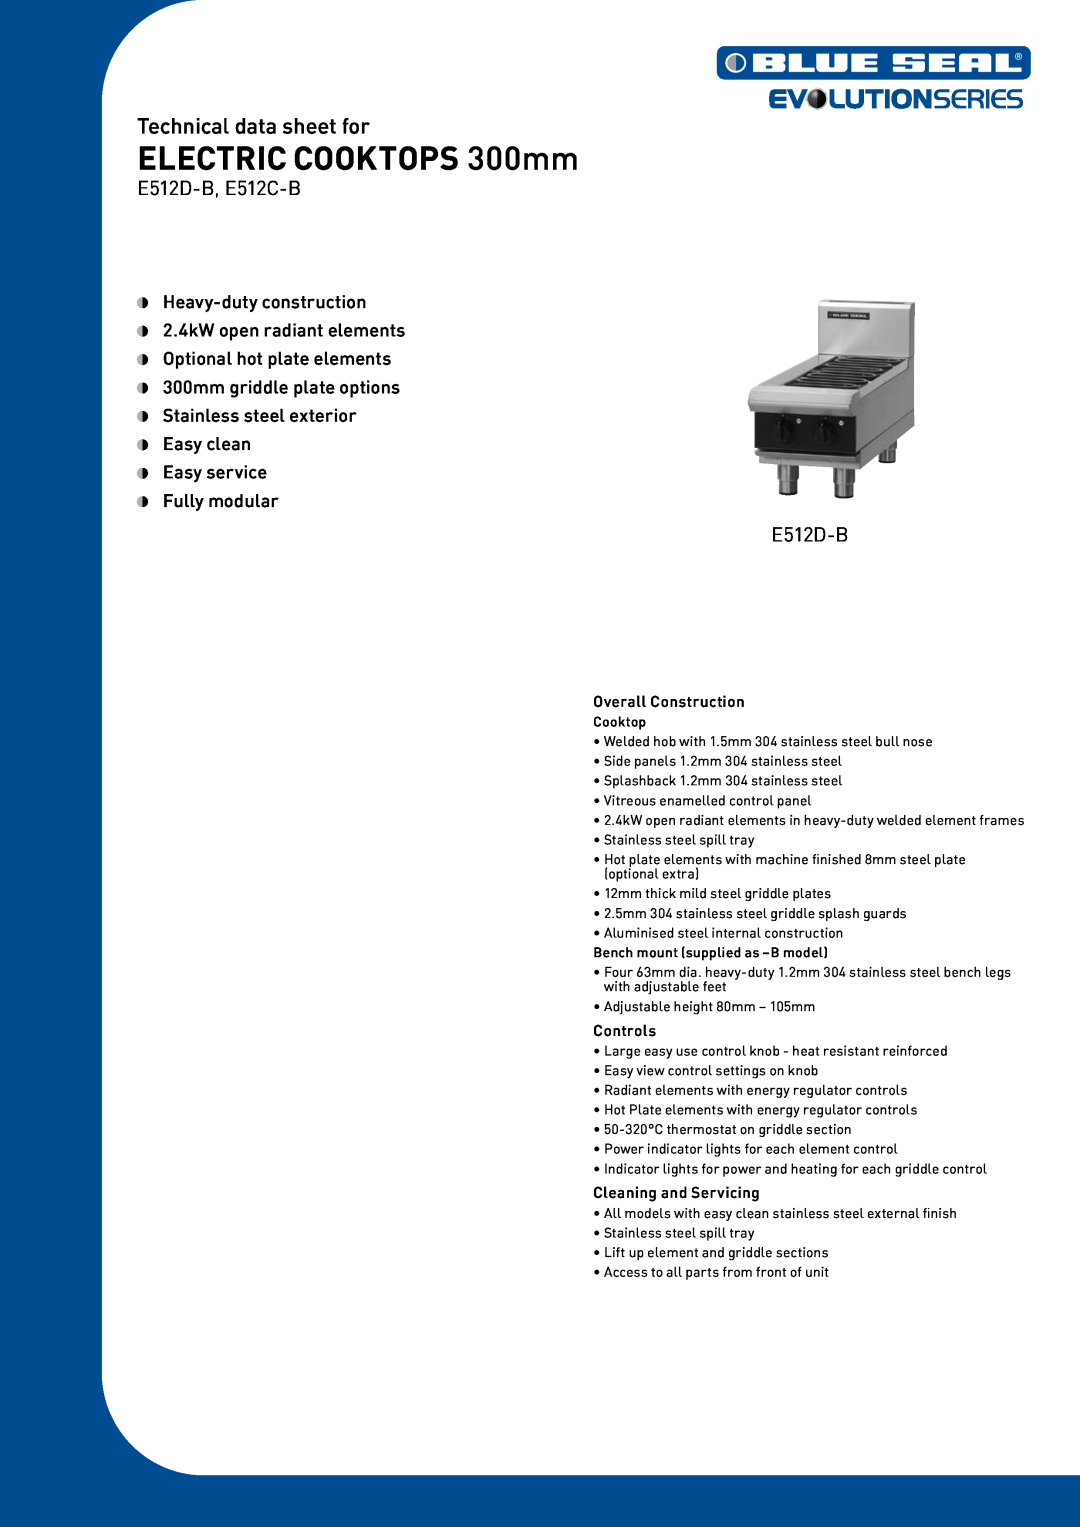 Moffat manual ELECTRIC COOKTOPS 300mm, Technical data sheet for, Overall Construction, Controls, E512D-B, E512C-B 